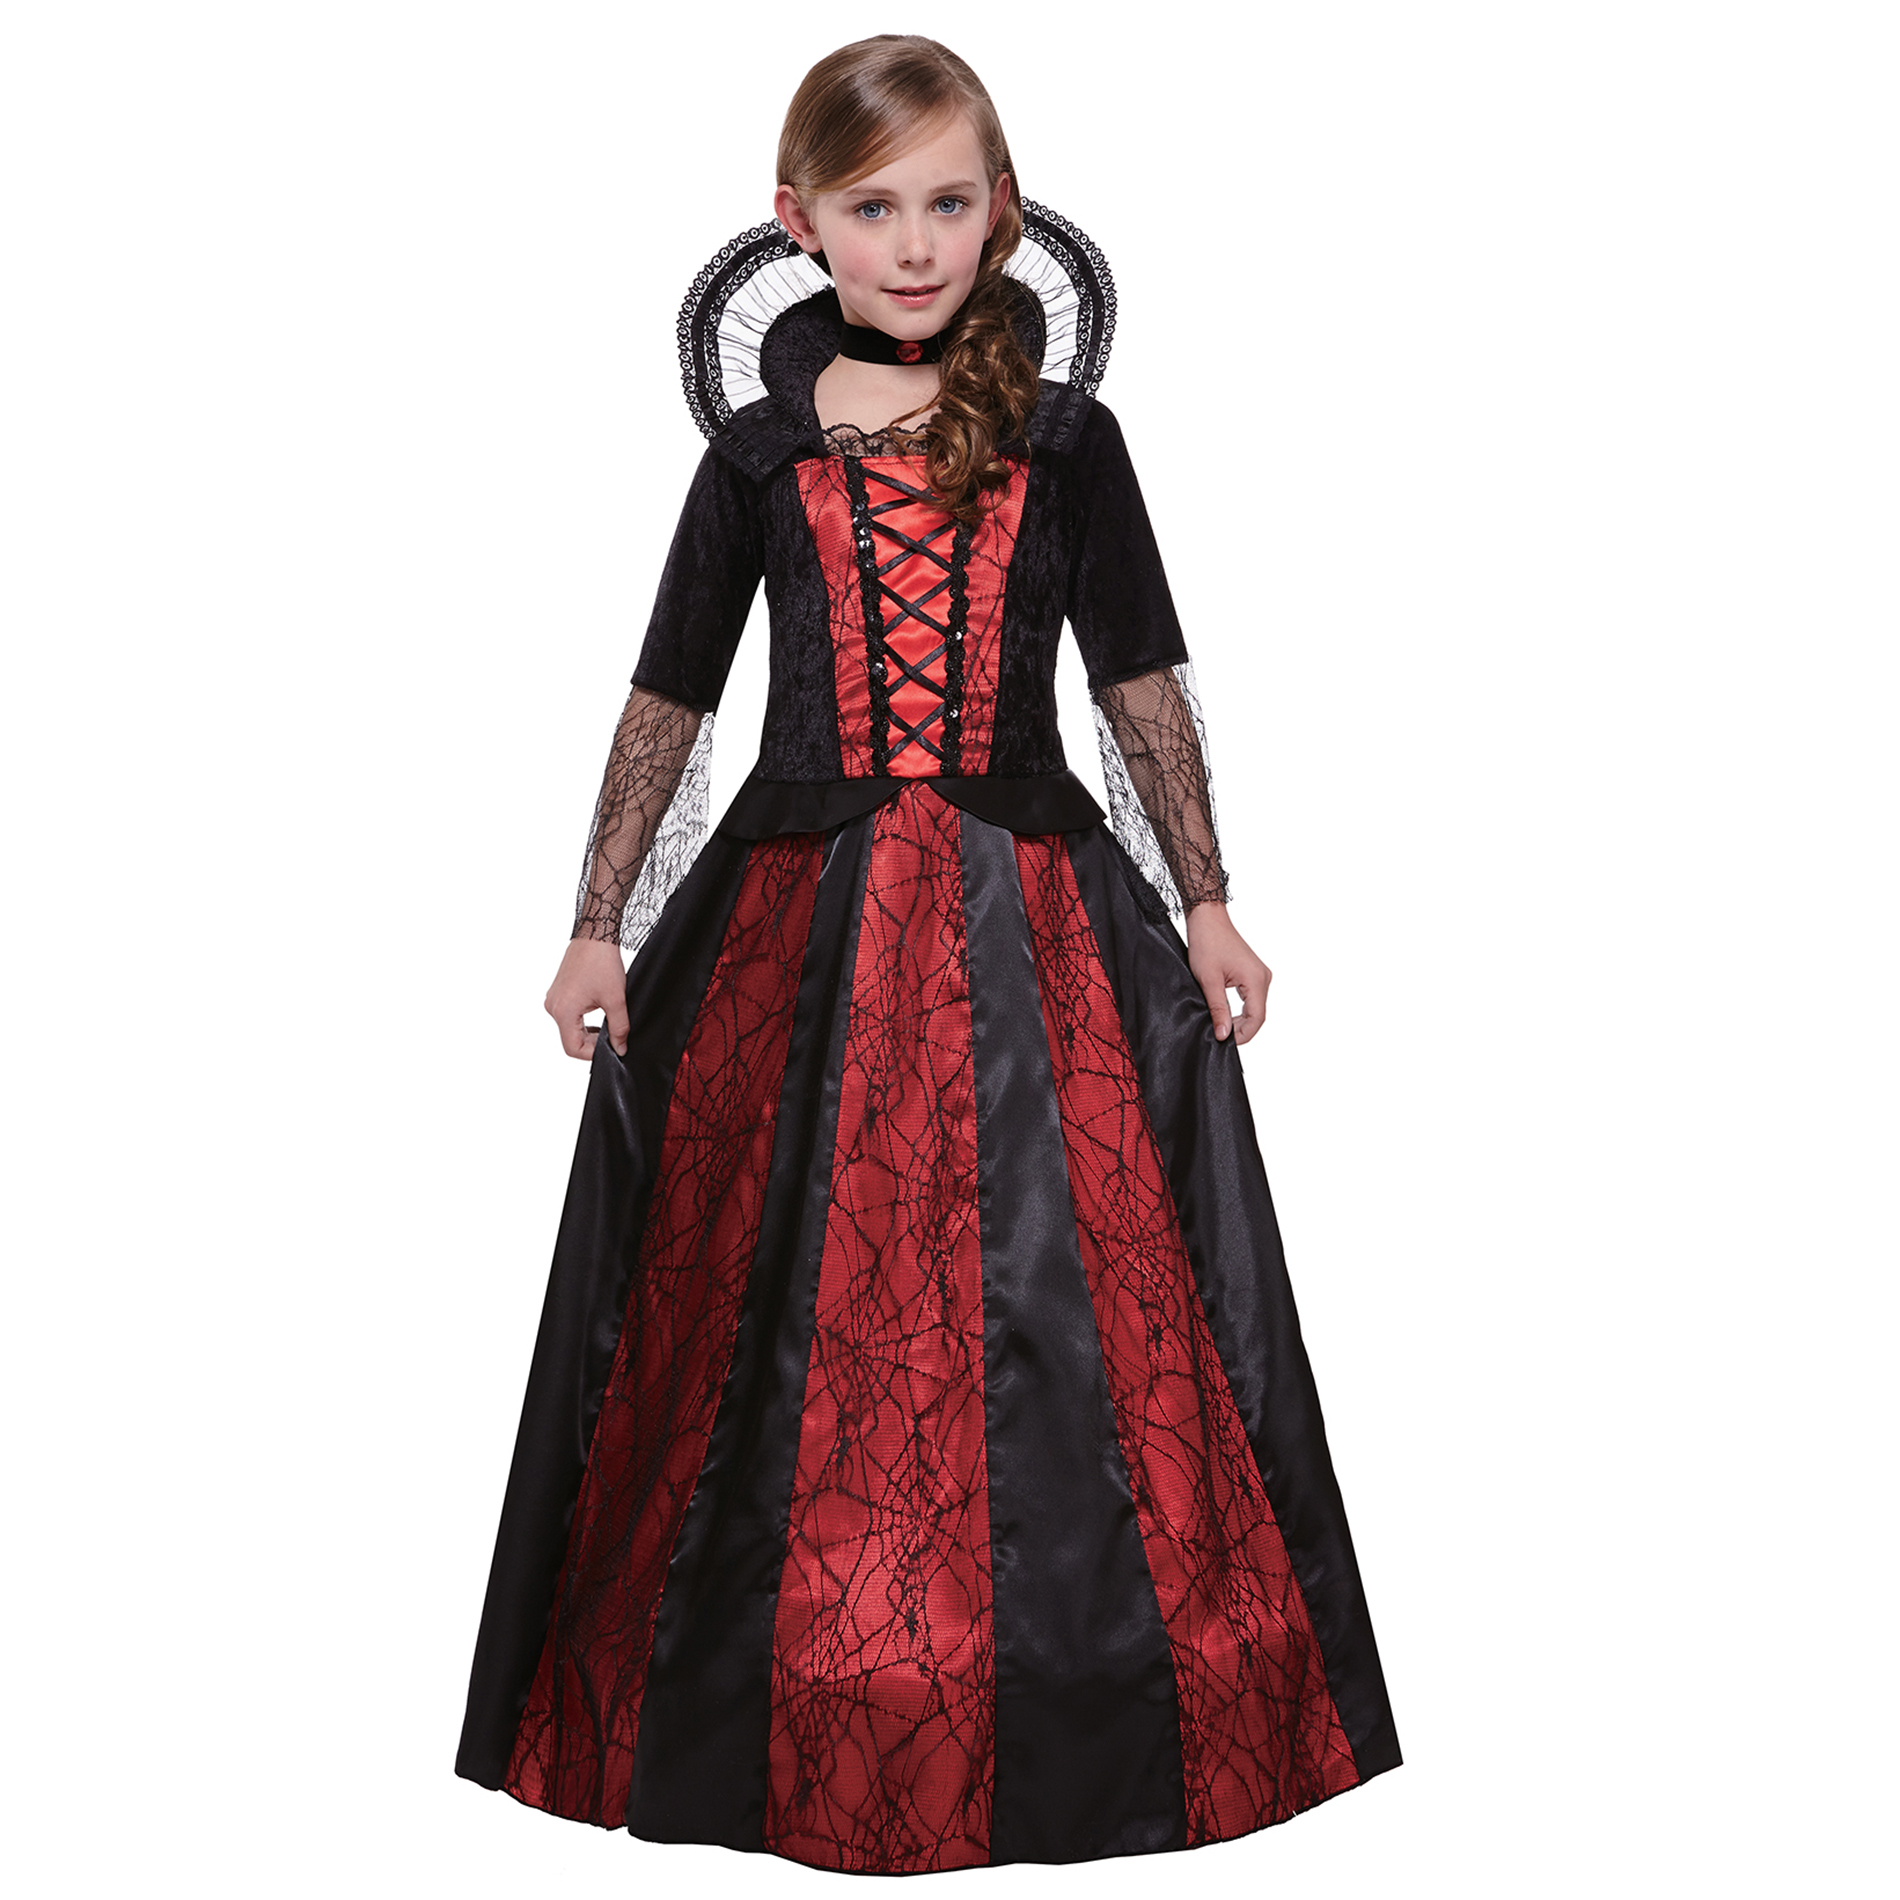 Totally Ghoul Girls' Gothic Vampiress Halloween Costume